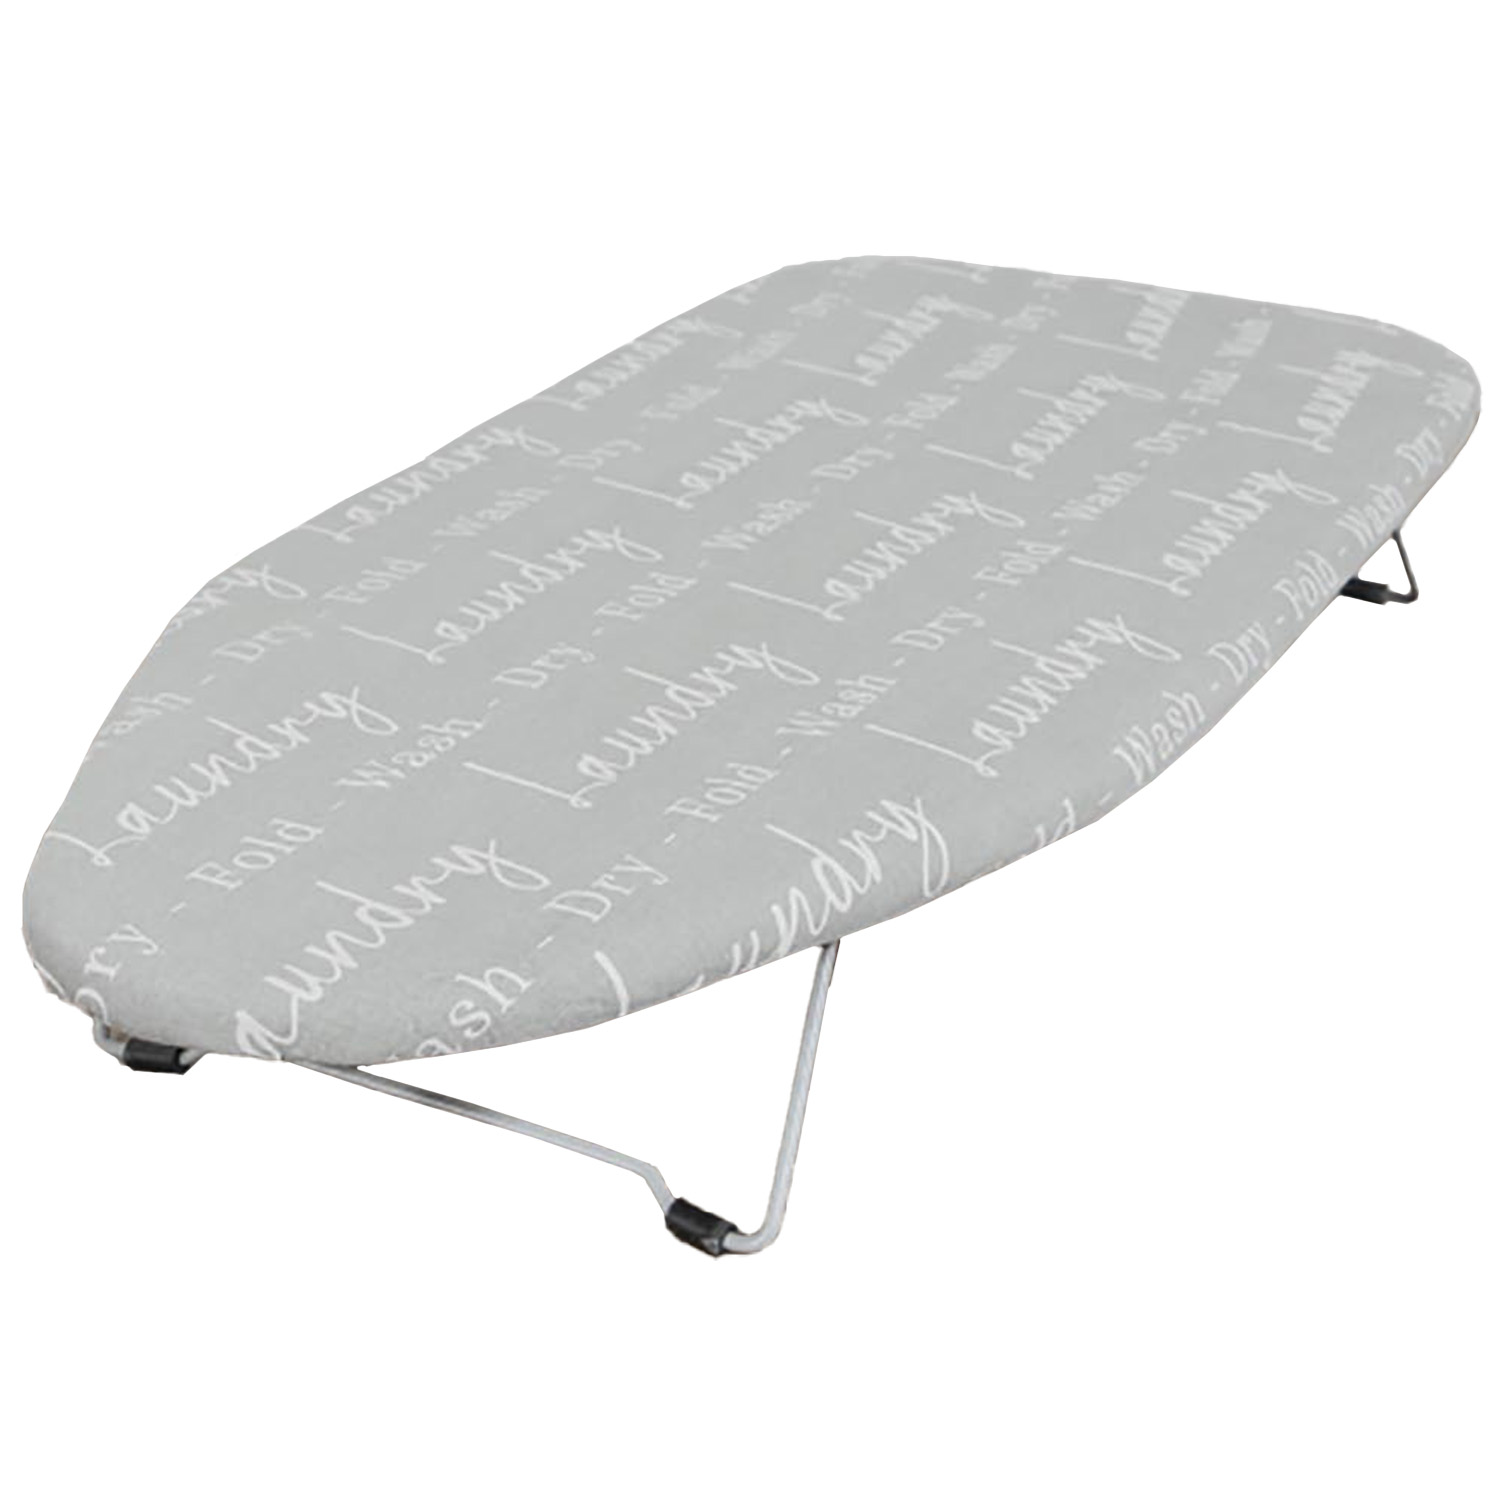 Tabletop Ironing Board - Grey Image 1